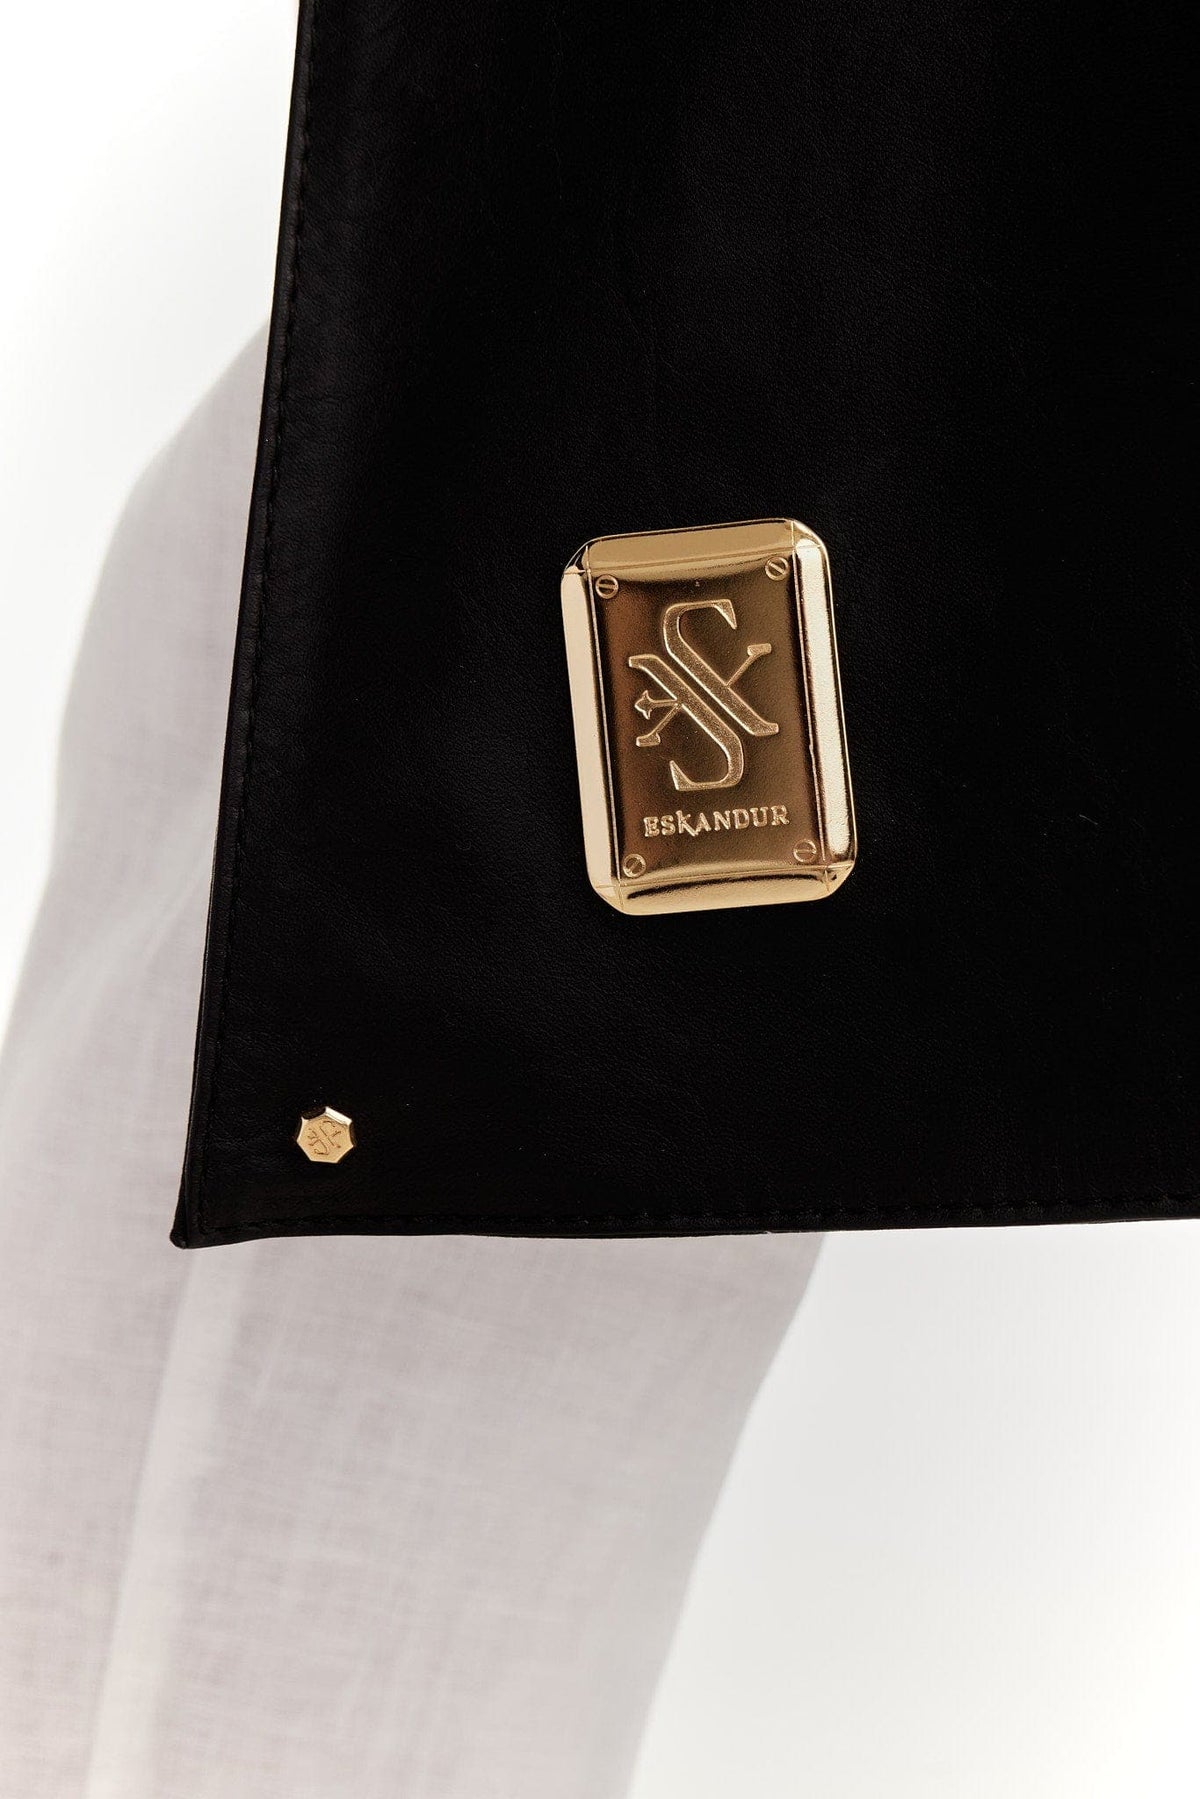 Eskandur men&#39;s black leather luxury premium apron zoom on gold logo plate